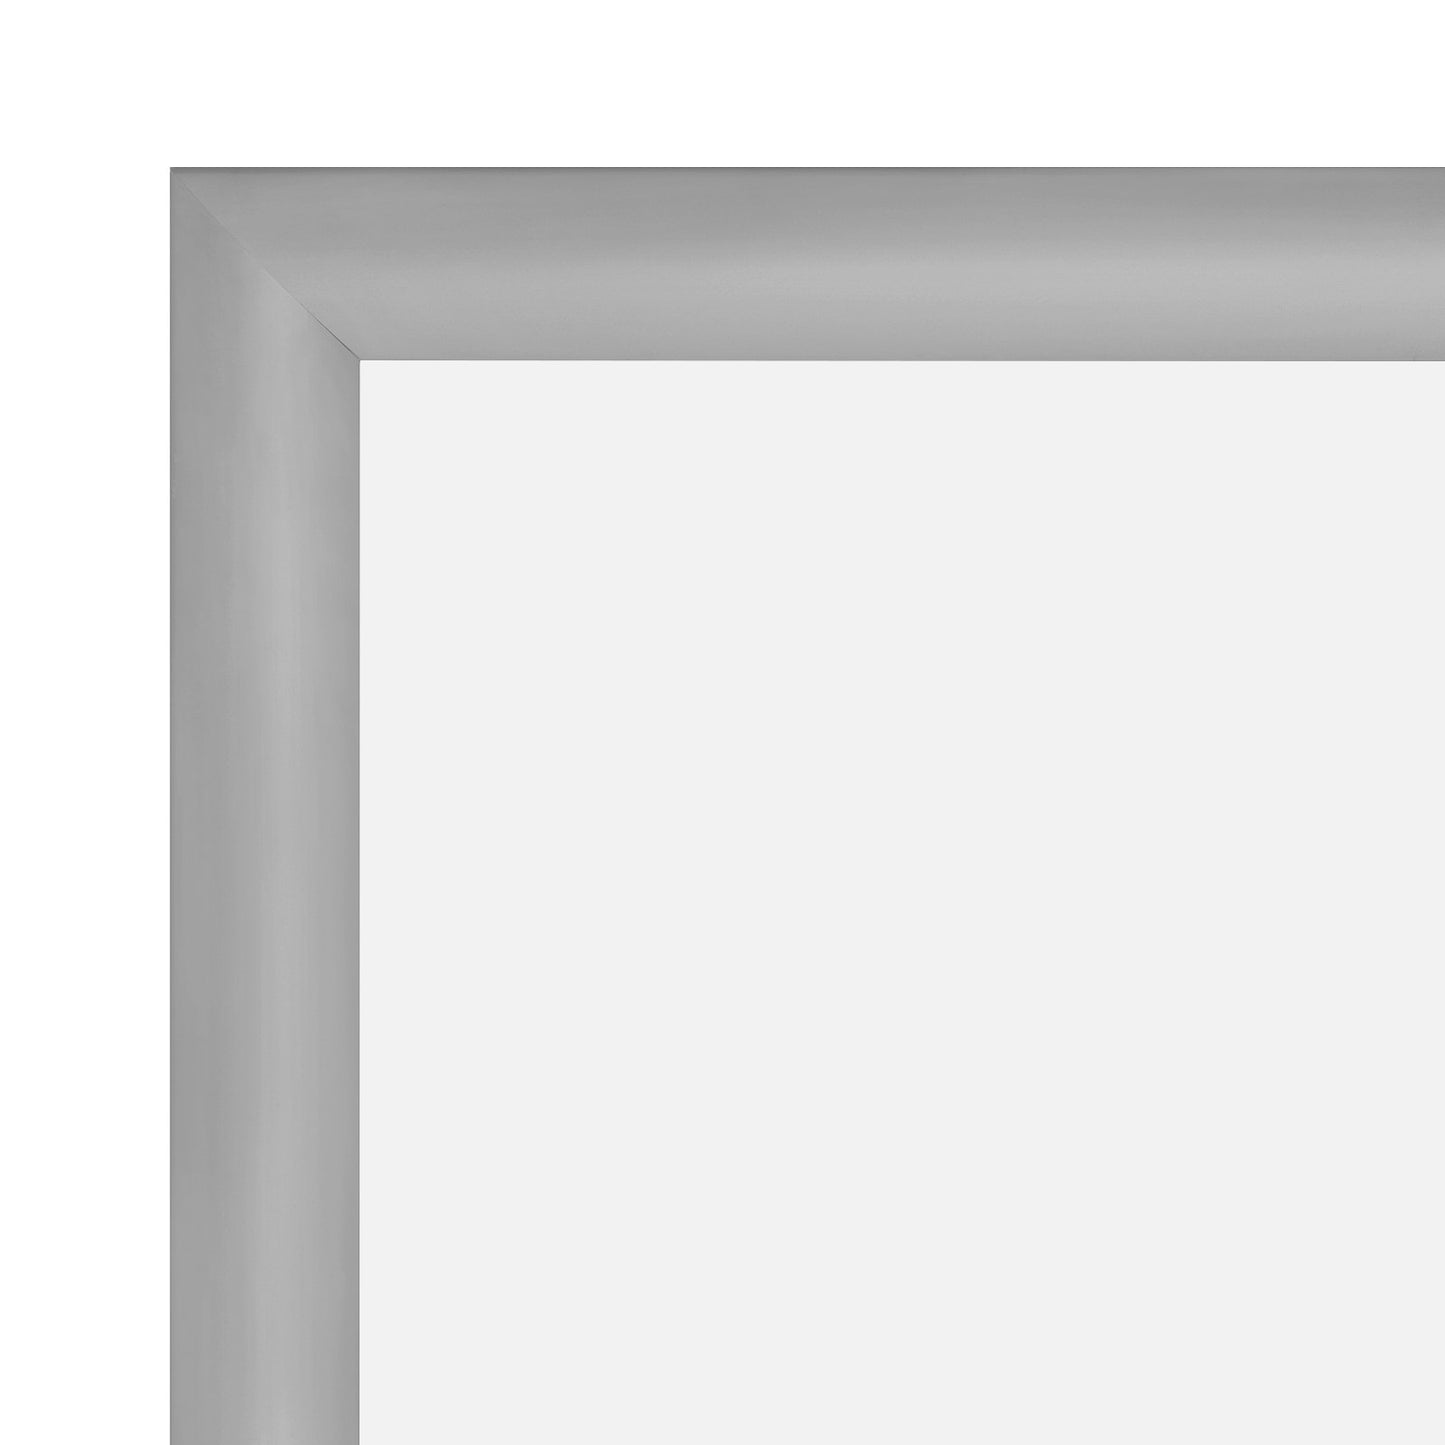 68.58 x 101.60 cm Silver Snap Frame - 30MM Profile